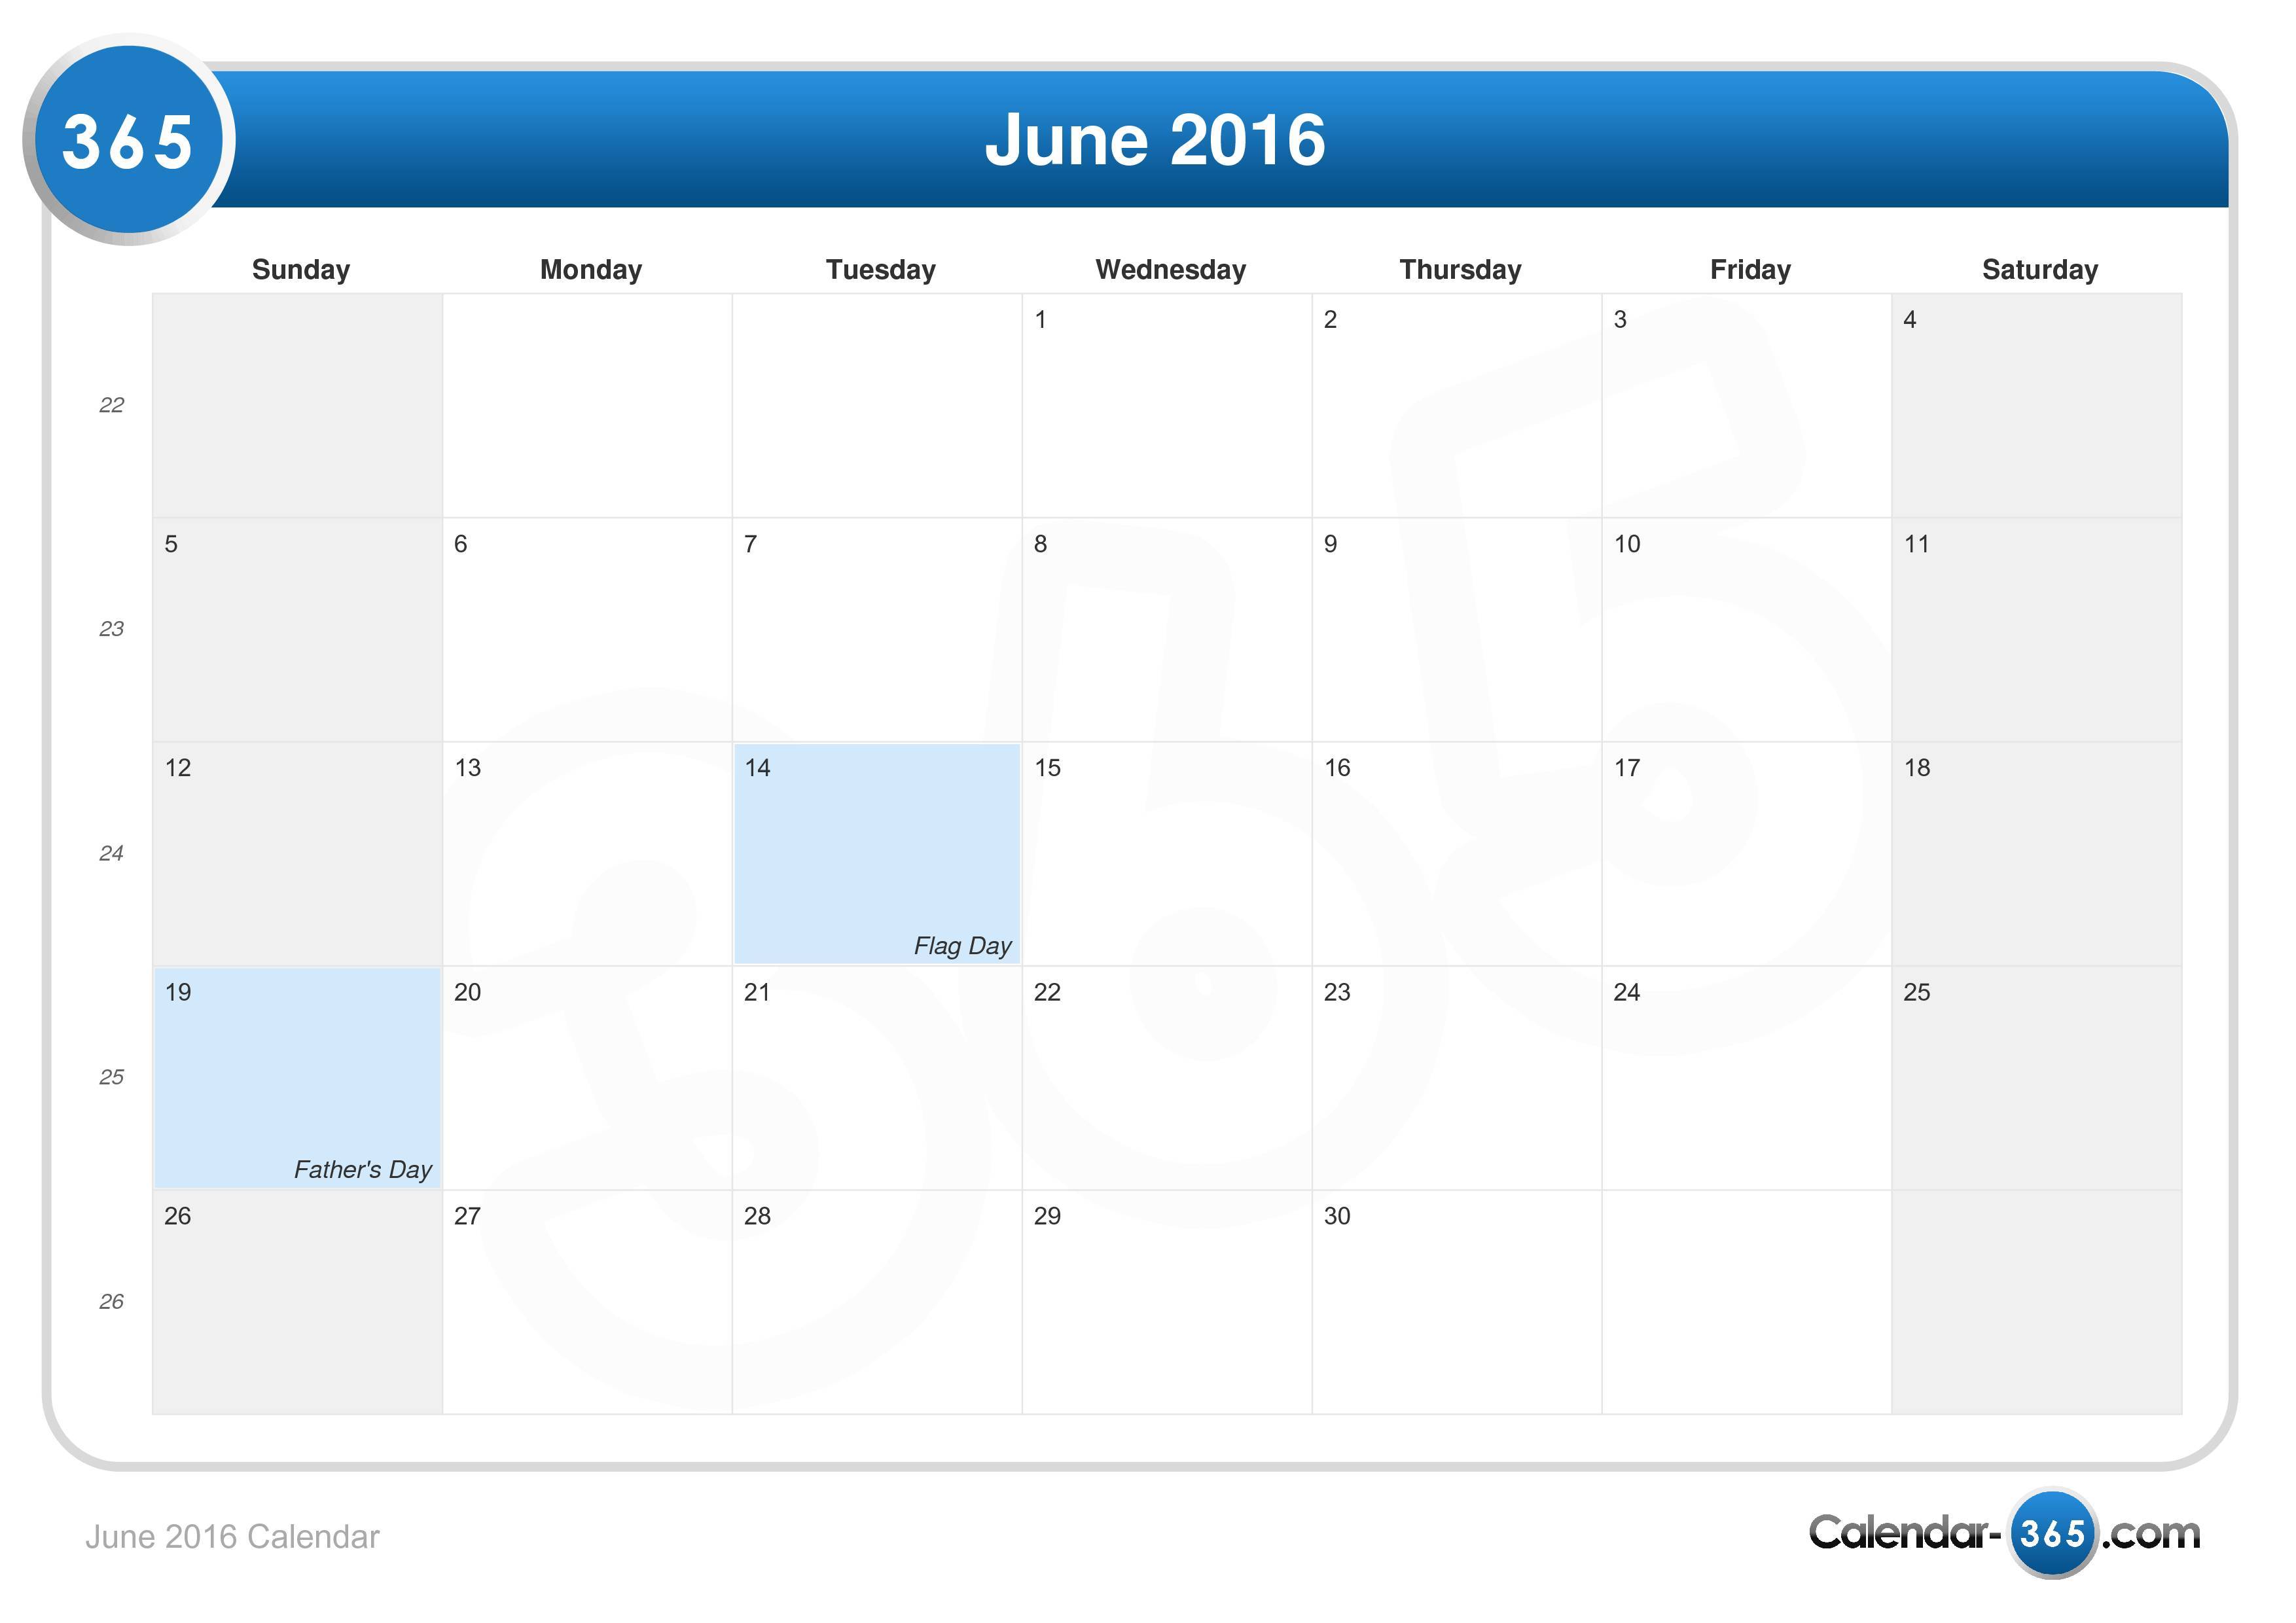 June 16 Calendar